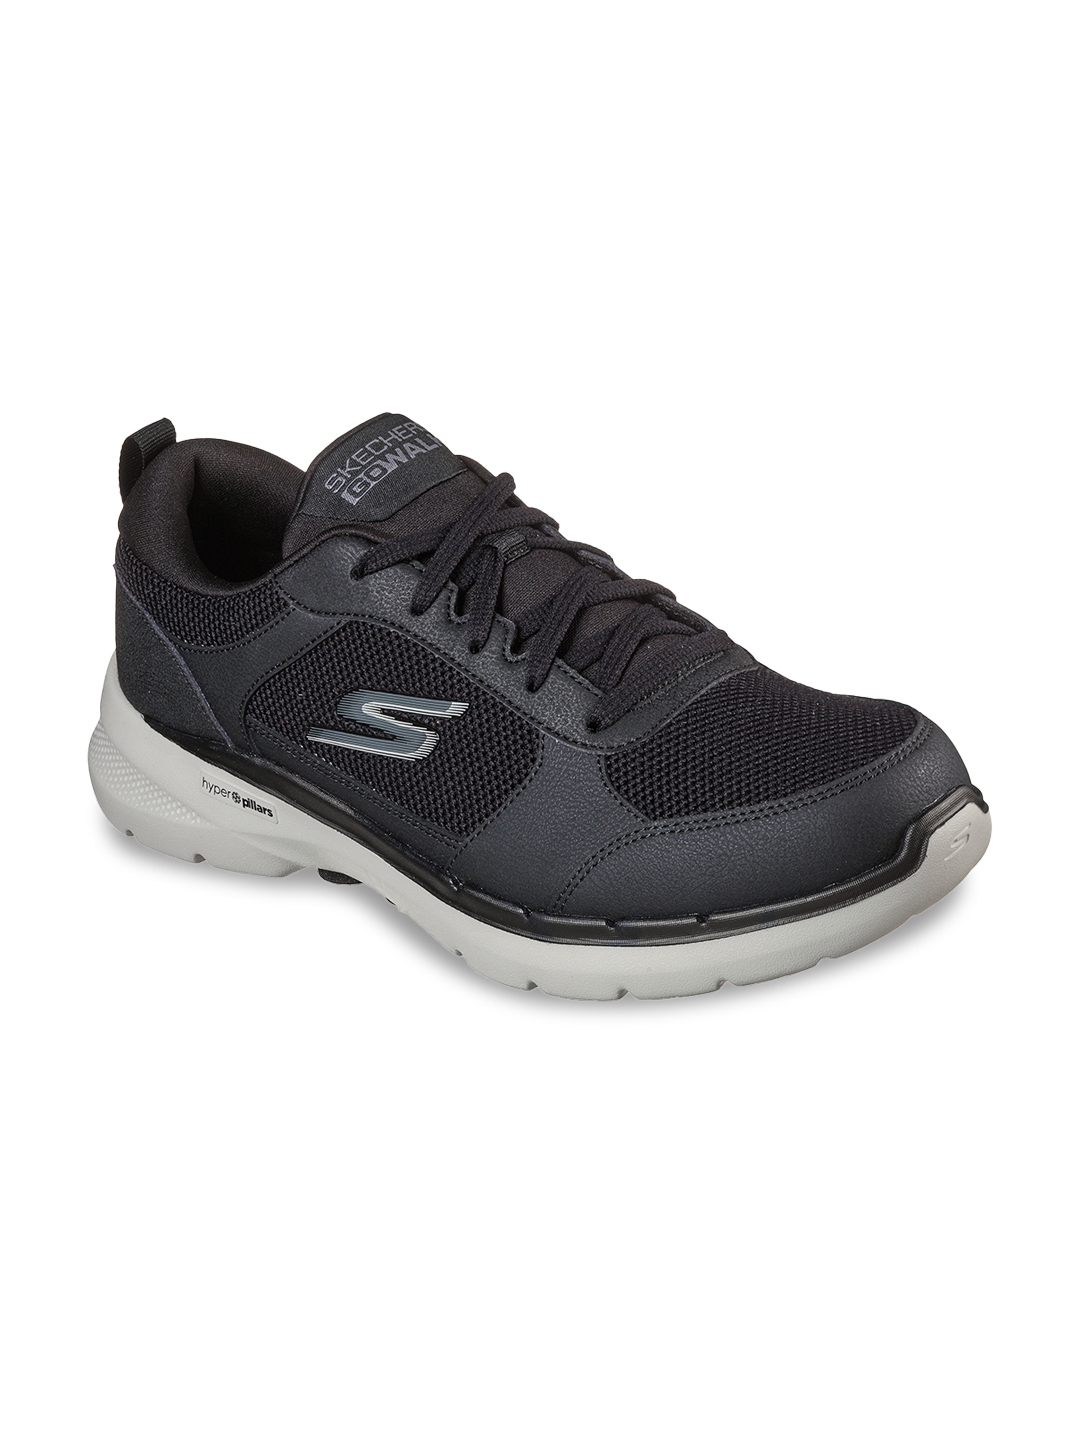 Buy Skechers Men Black Mesh Walking Non Marking Shoes - Sports Shoes ...